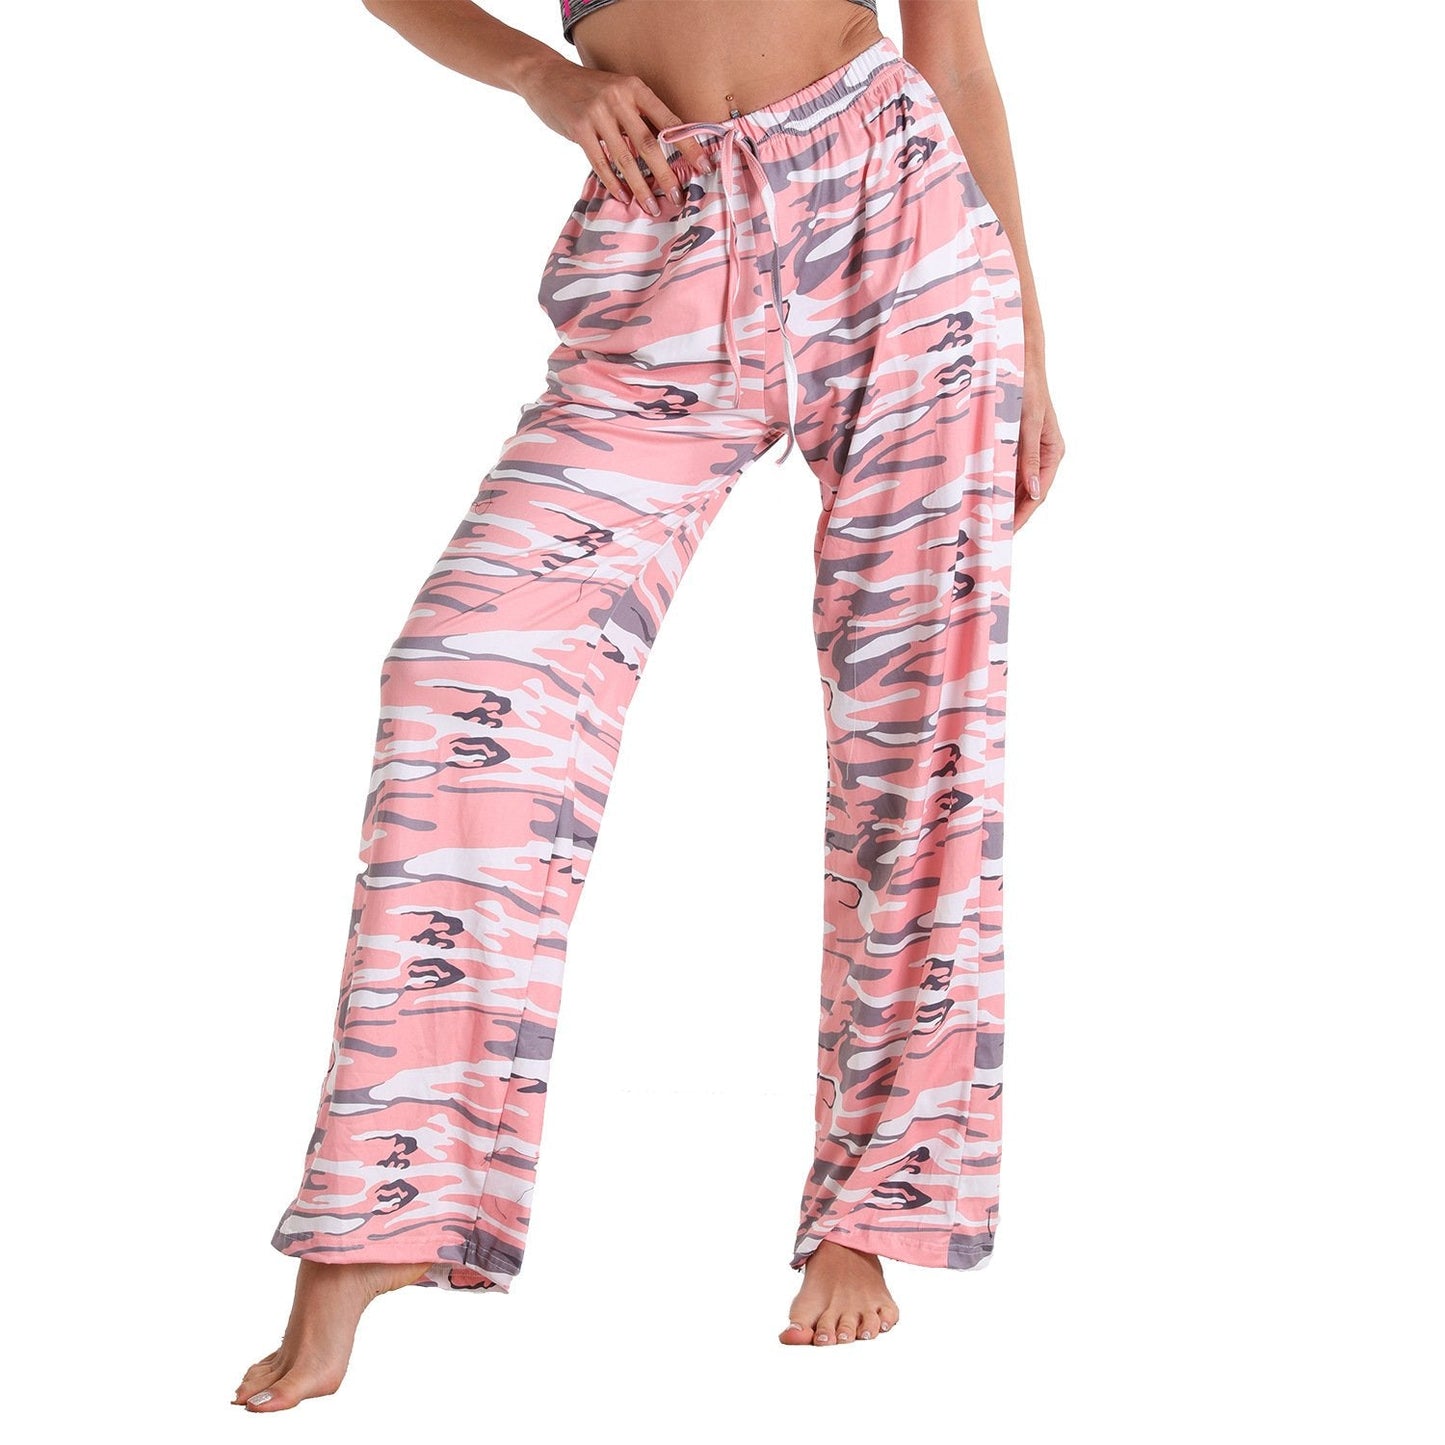 Fashion Casual Women Pajamas Pants-Pajamas-3013-S-Free Shipping Leatheretro